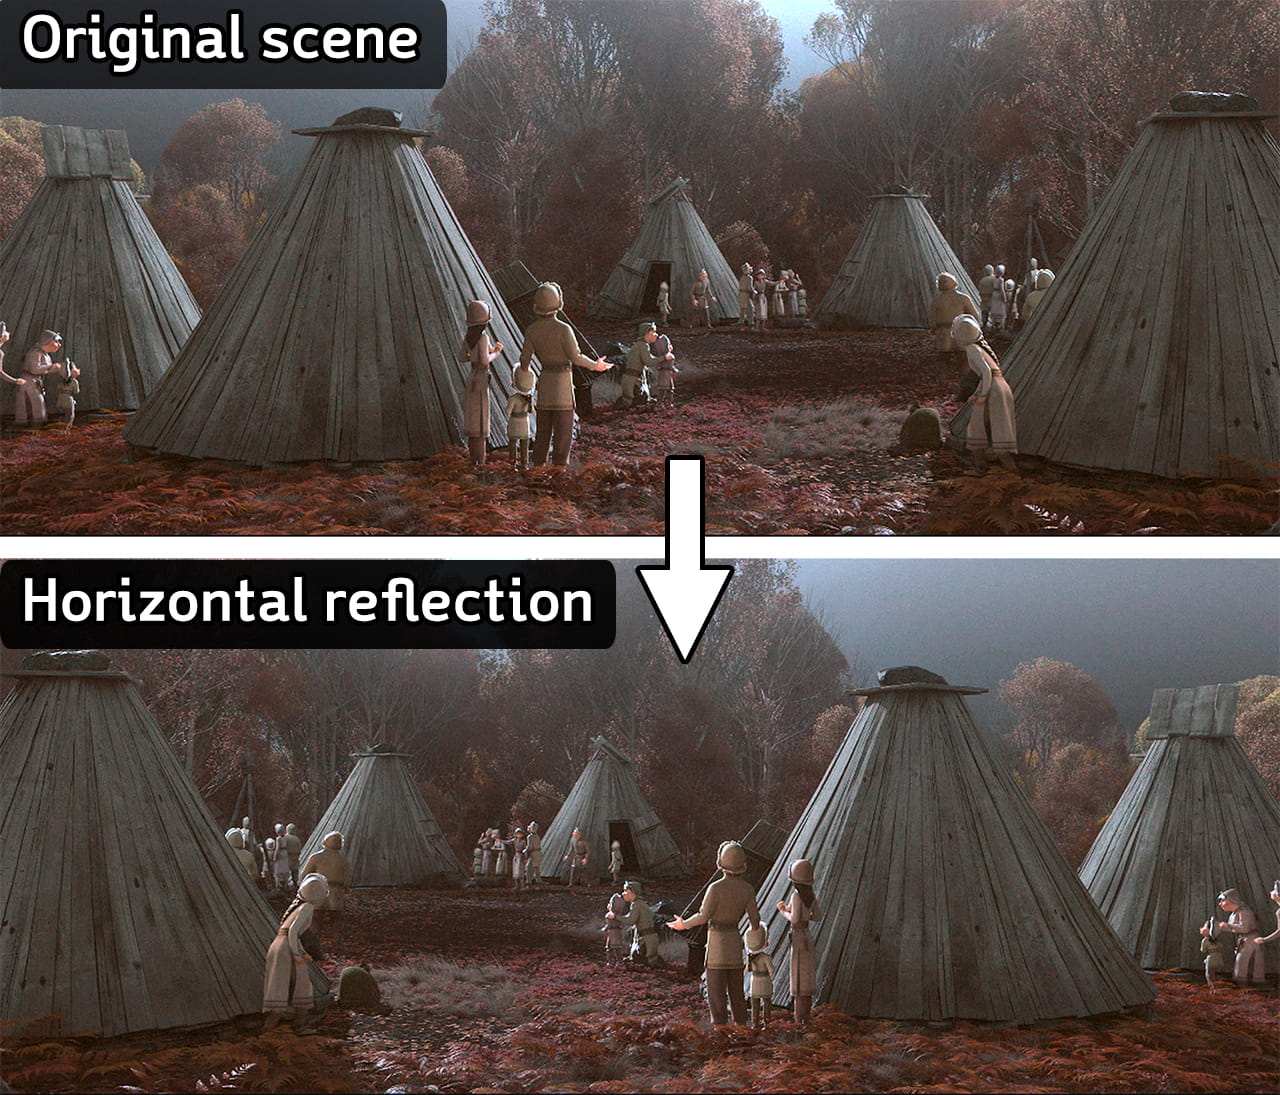 Comparing flipped image to the original scene